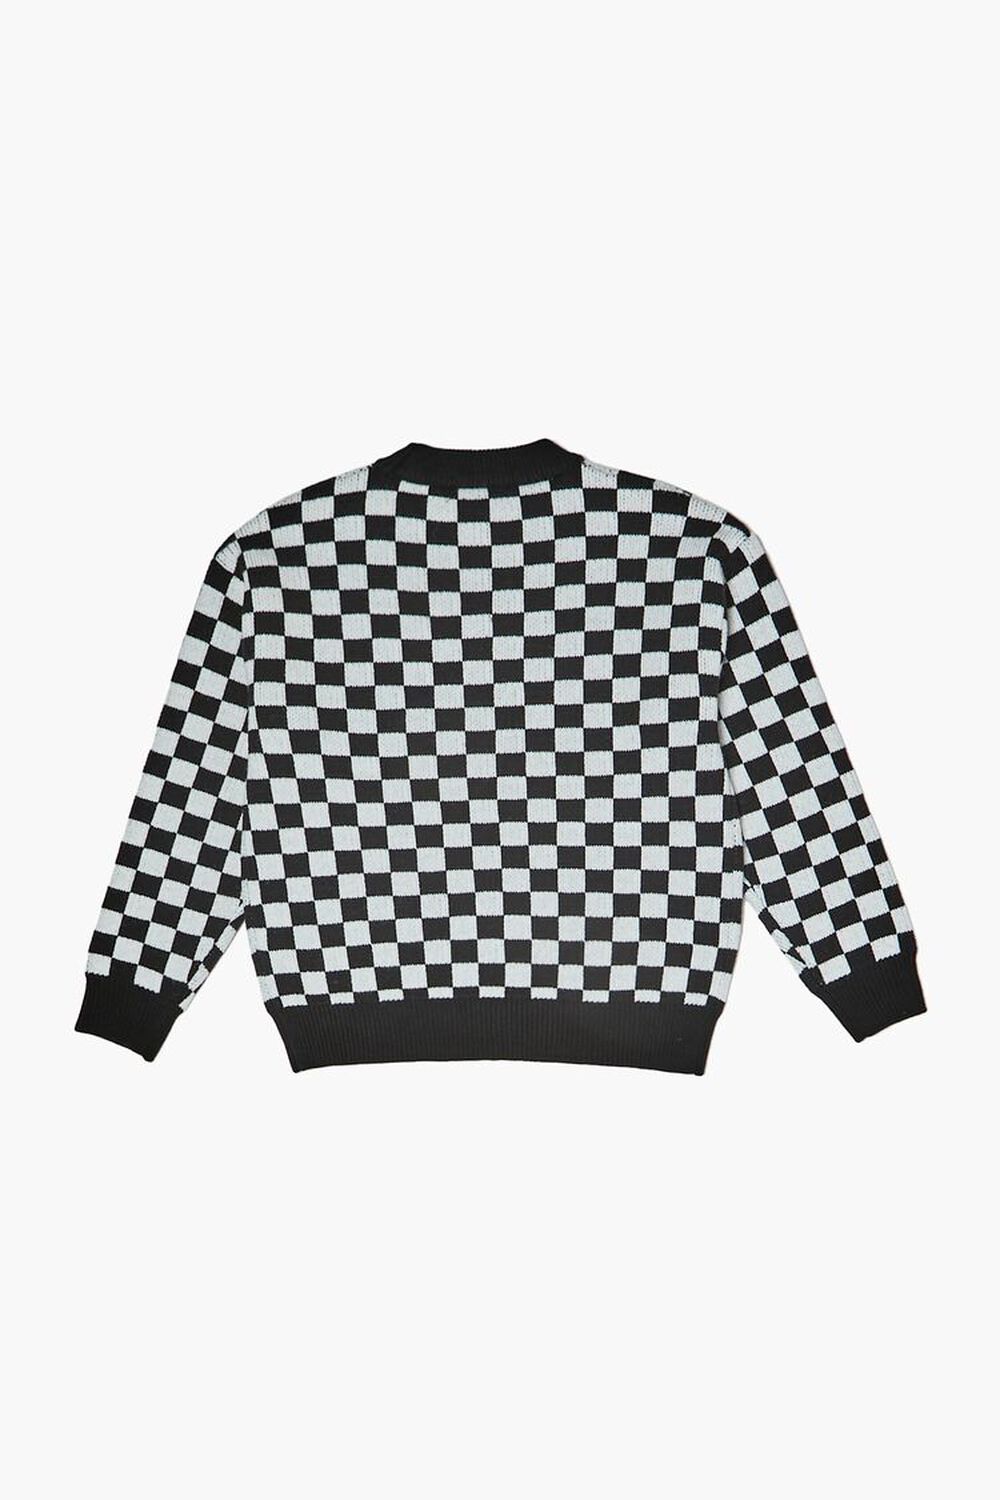 Kids Checkered Pullover (Girls + Boys), image 2